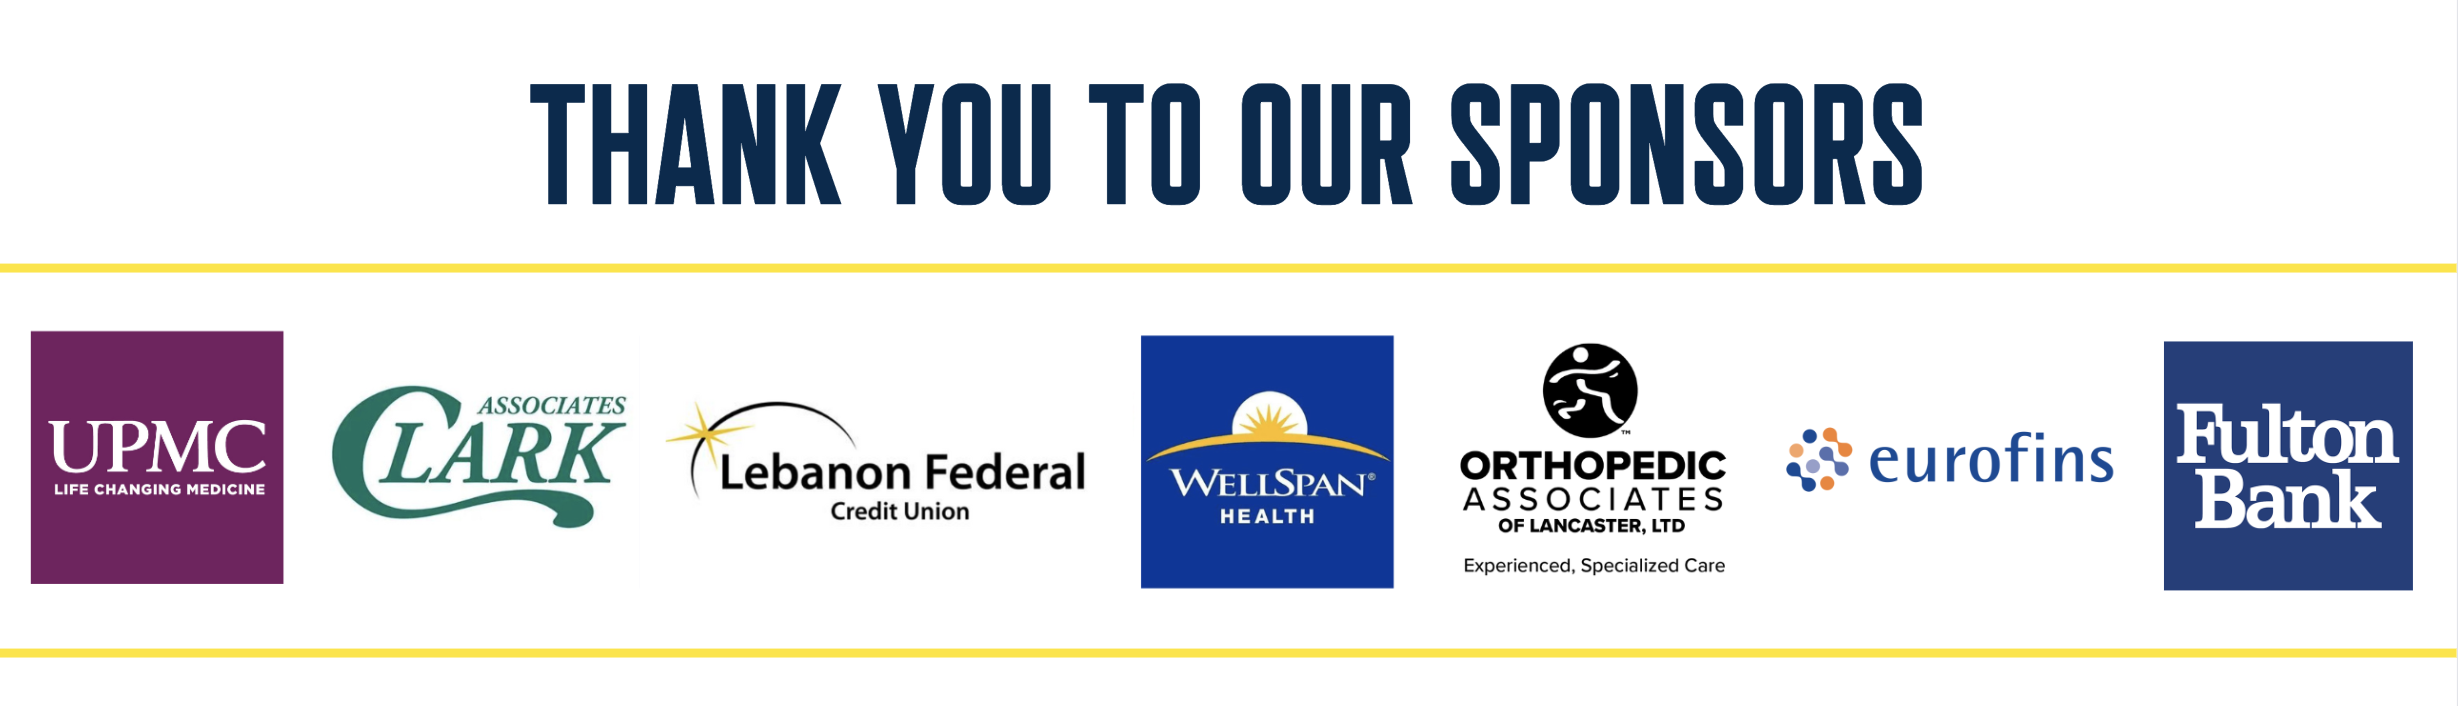 Career Fair sponsor logos: UPMC, Clark Associates, Lebanon Federal Credit Union, Wellspan, Orthopedic Associates of Lancaster, Eurofins, Fulton Bank